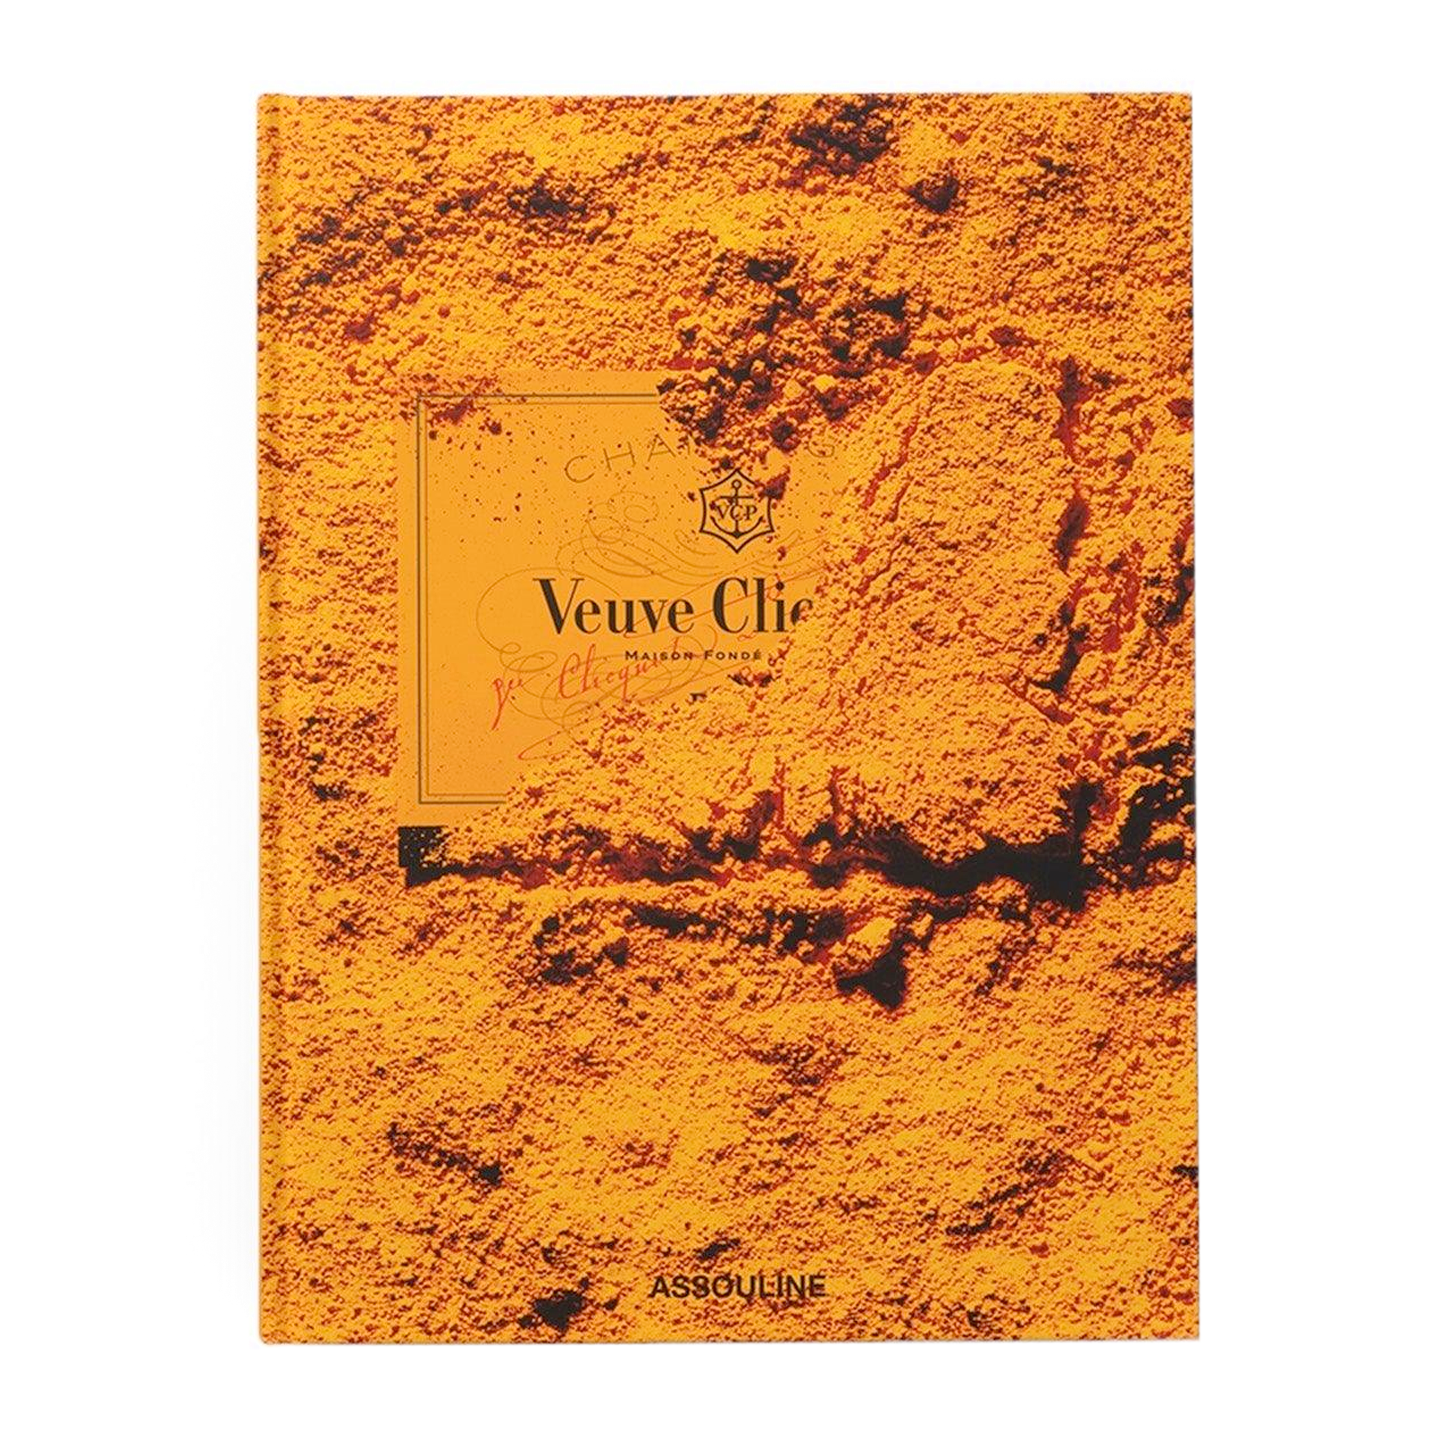 Veuve Clicquot: The Color of Excellence, ASSOULINE - RSVP Style